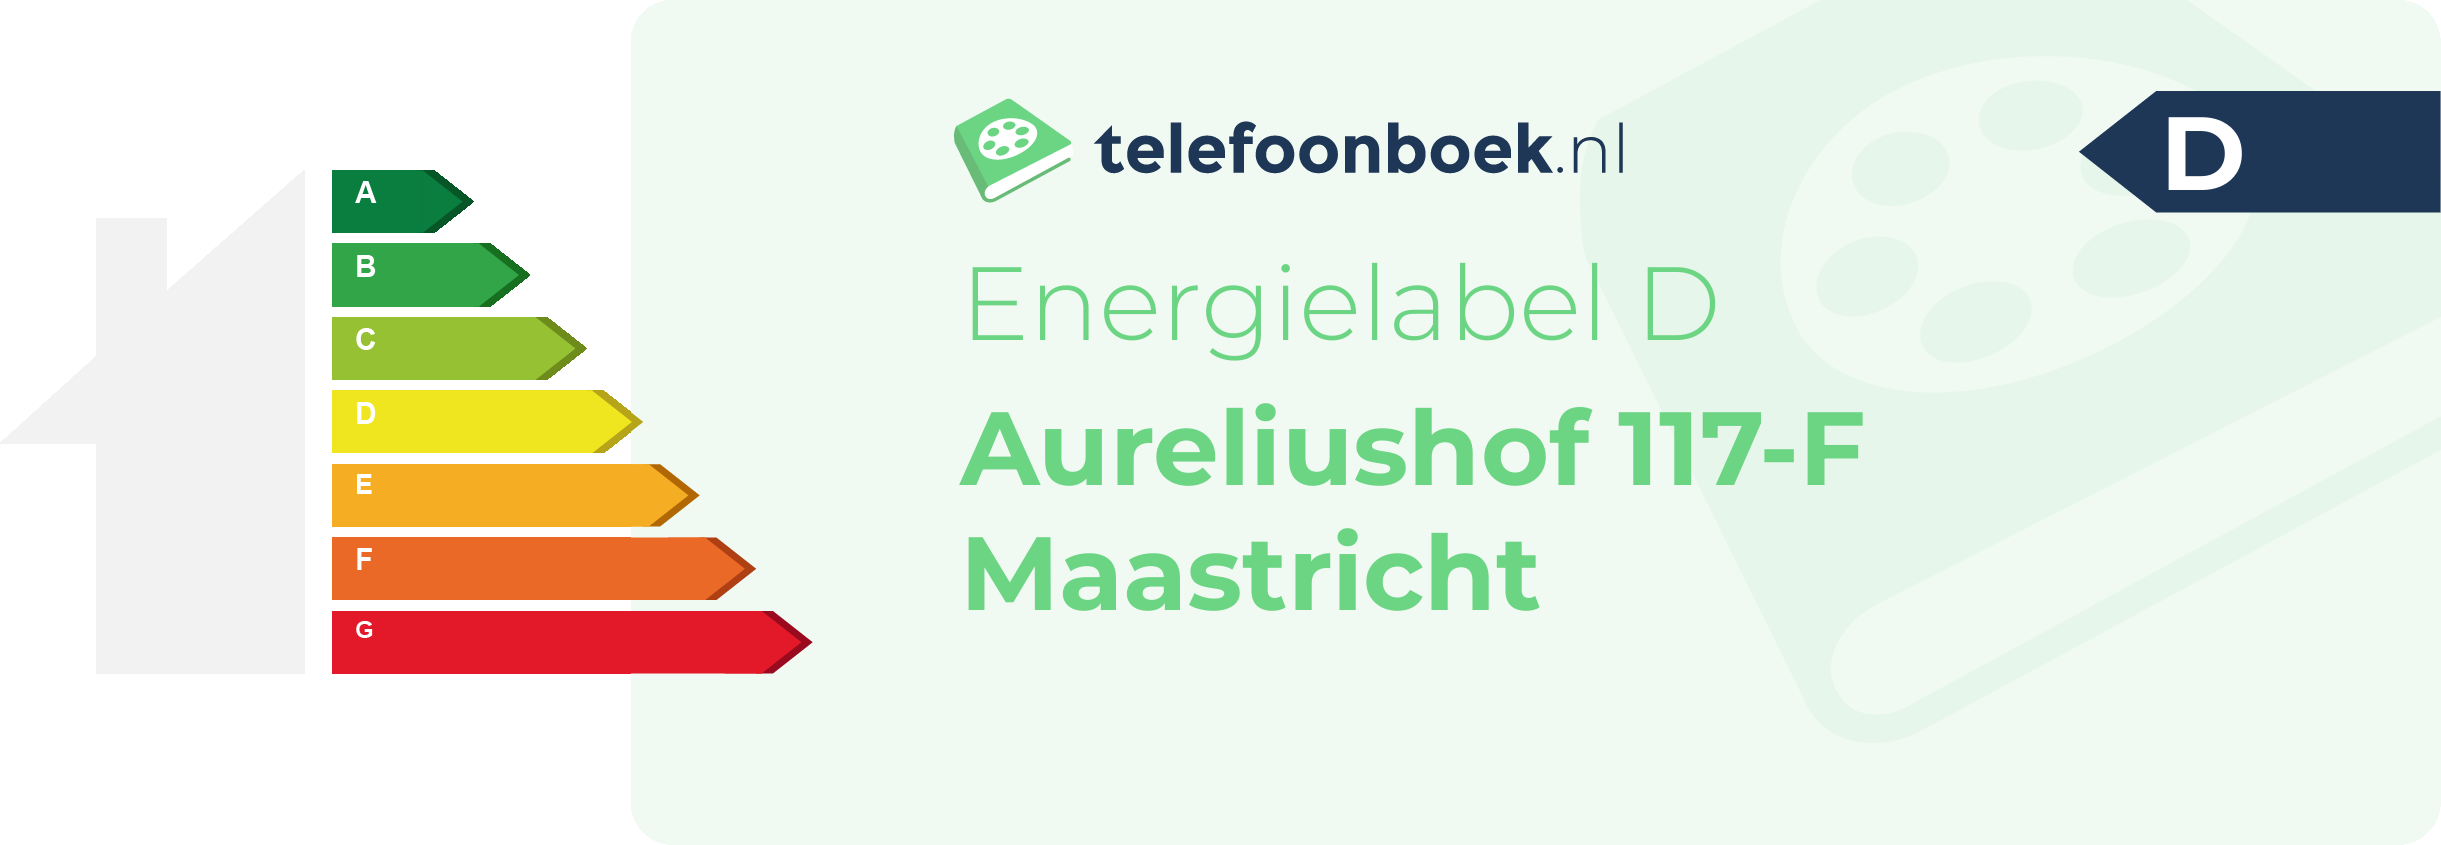 Energielabel Aureliushof 117-F Maastricht